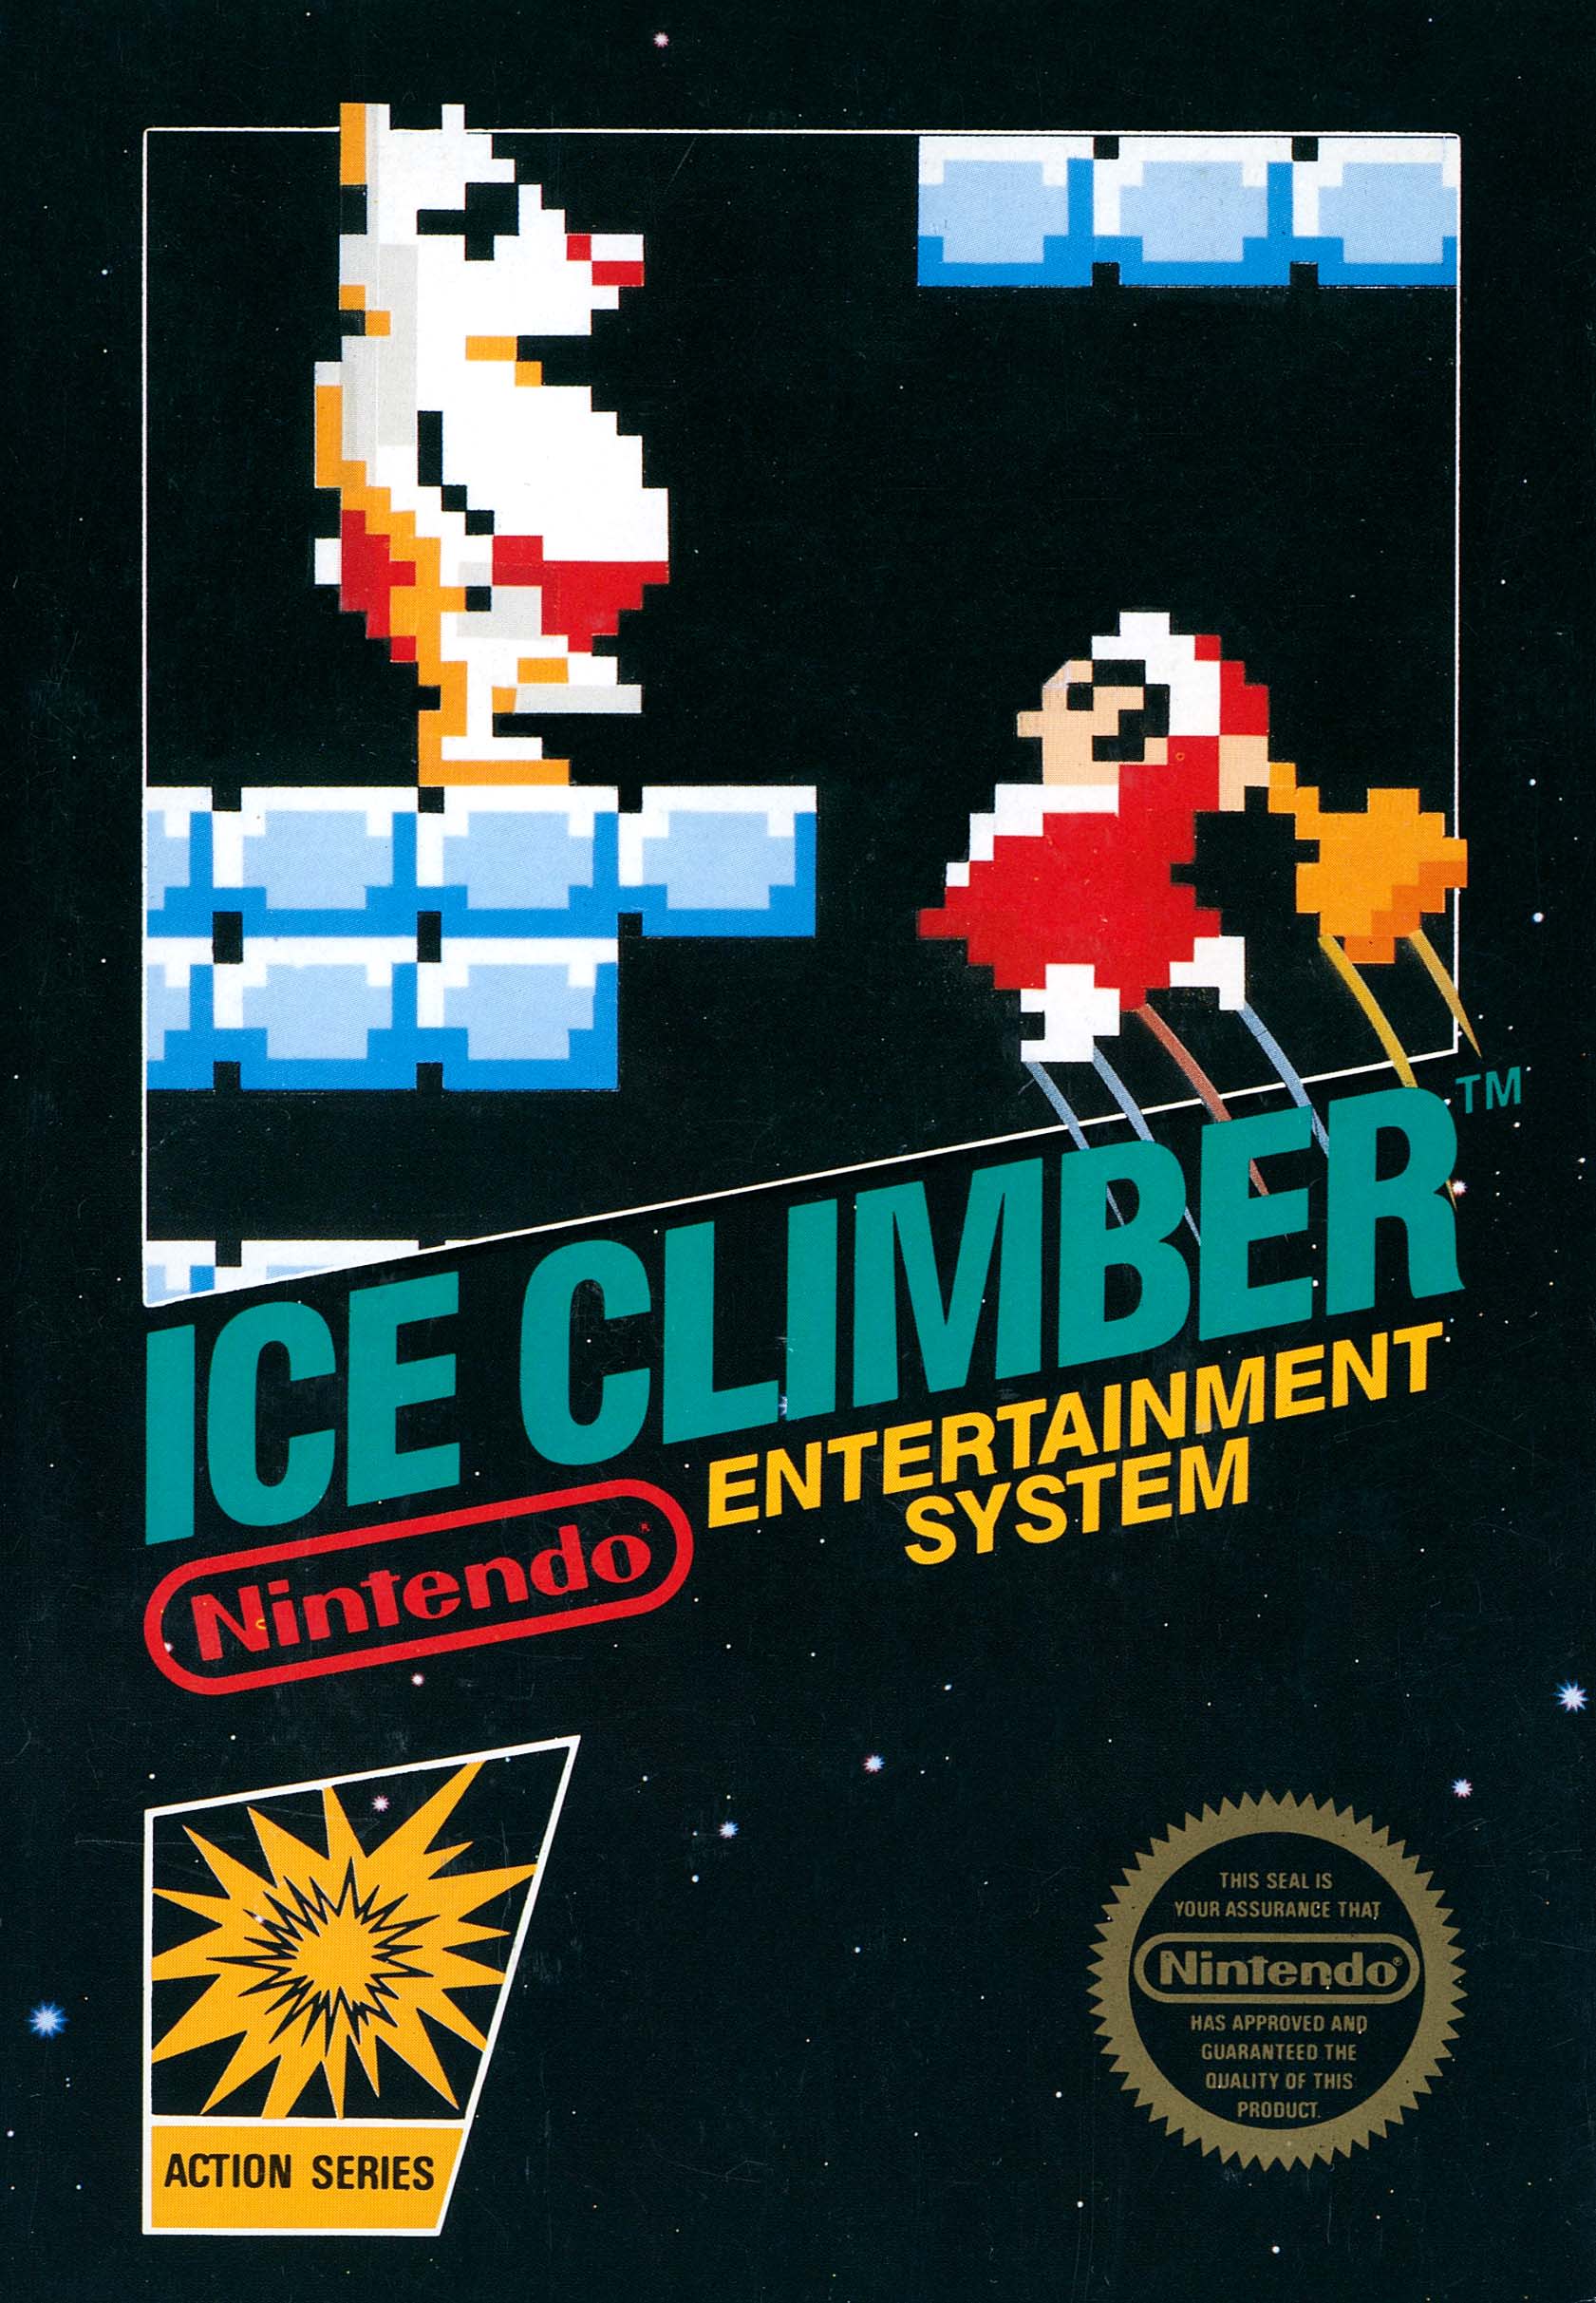 NES_Soft_IceClimber.jpg